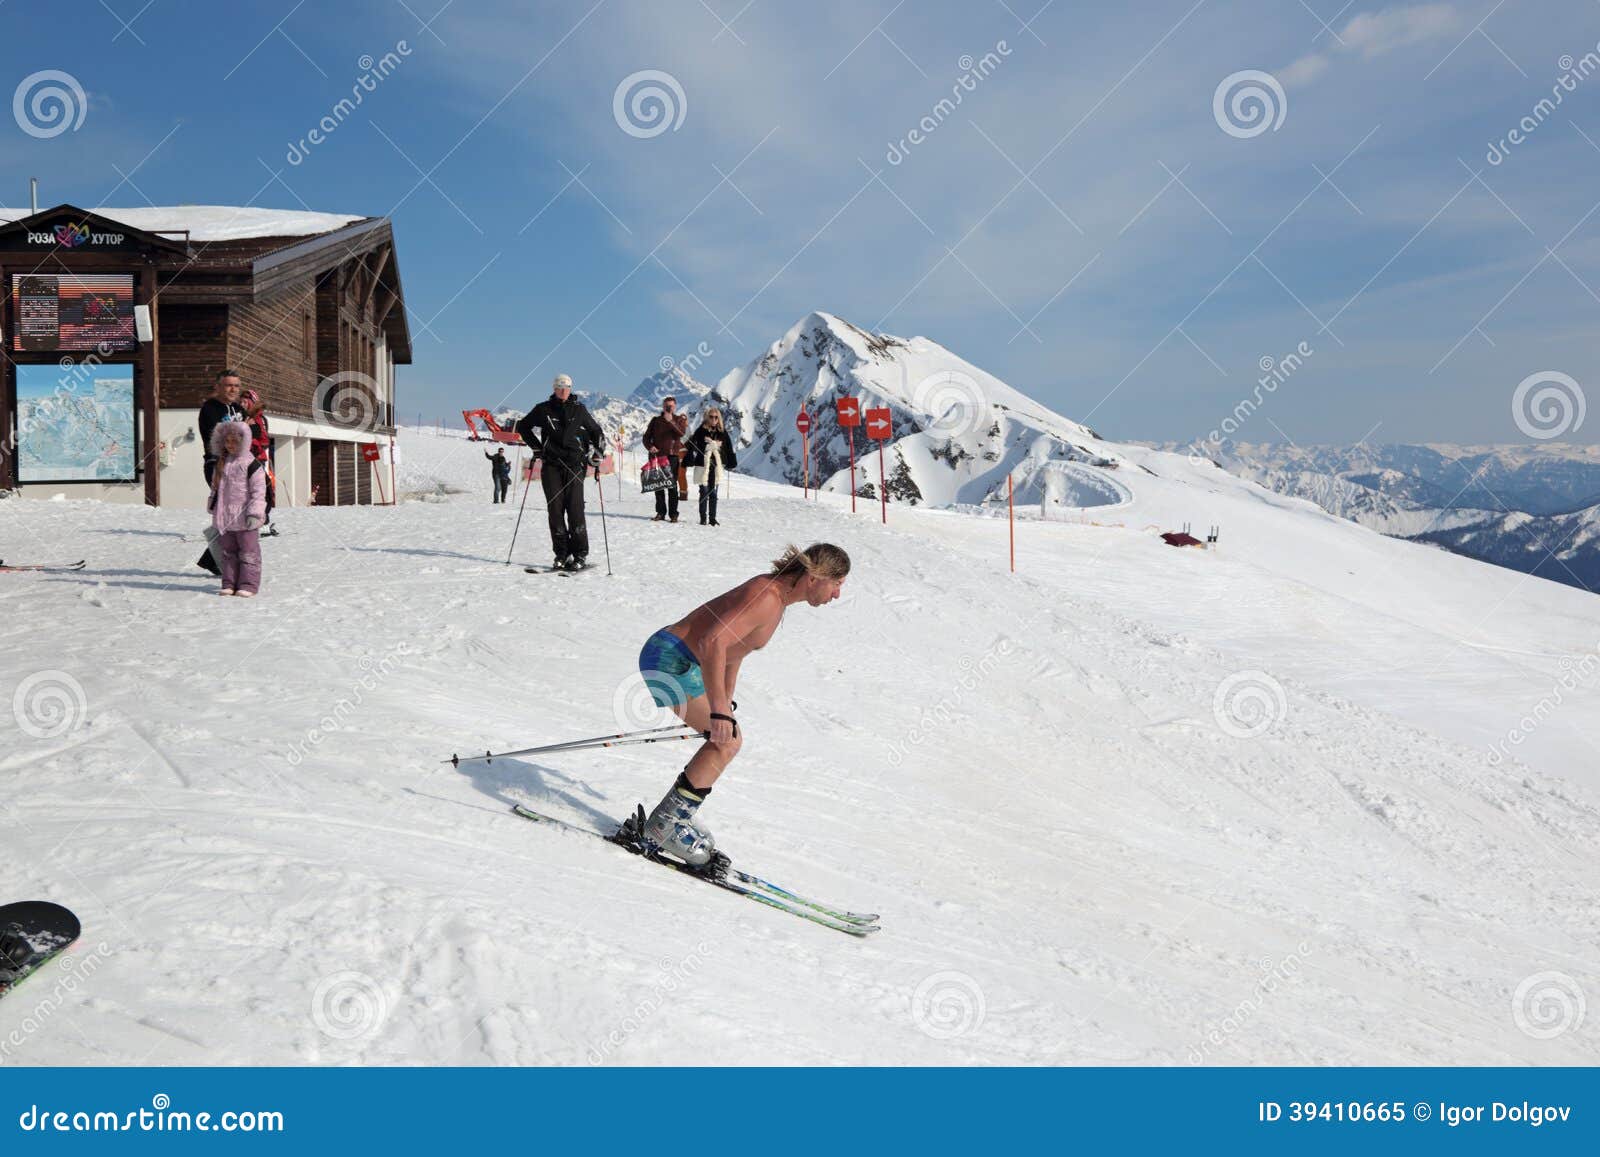 Naked Skier Editorial Image Image